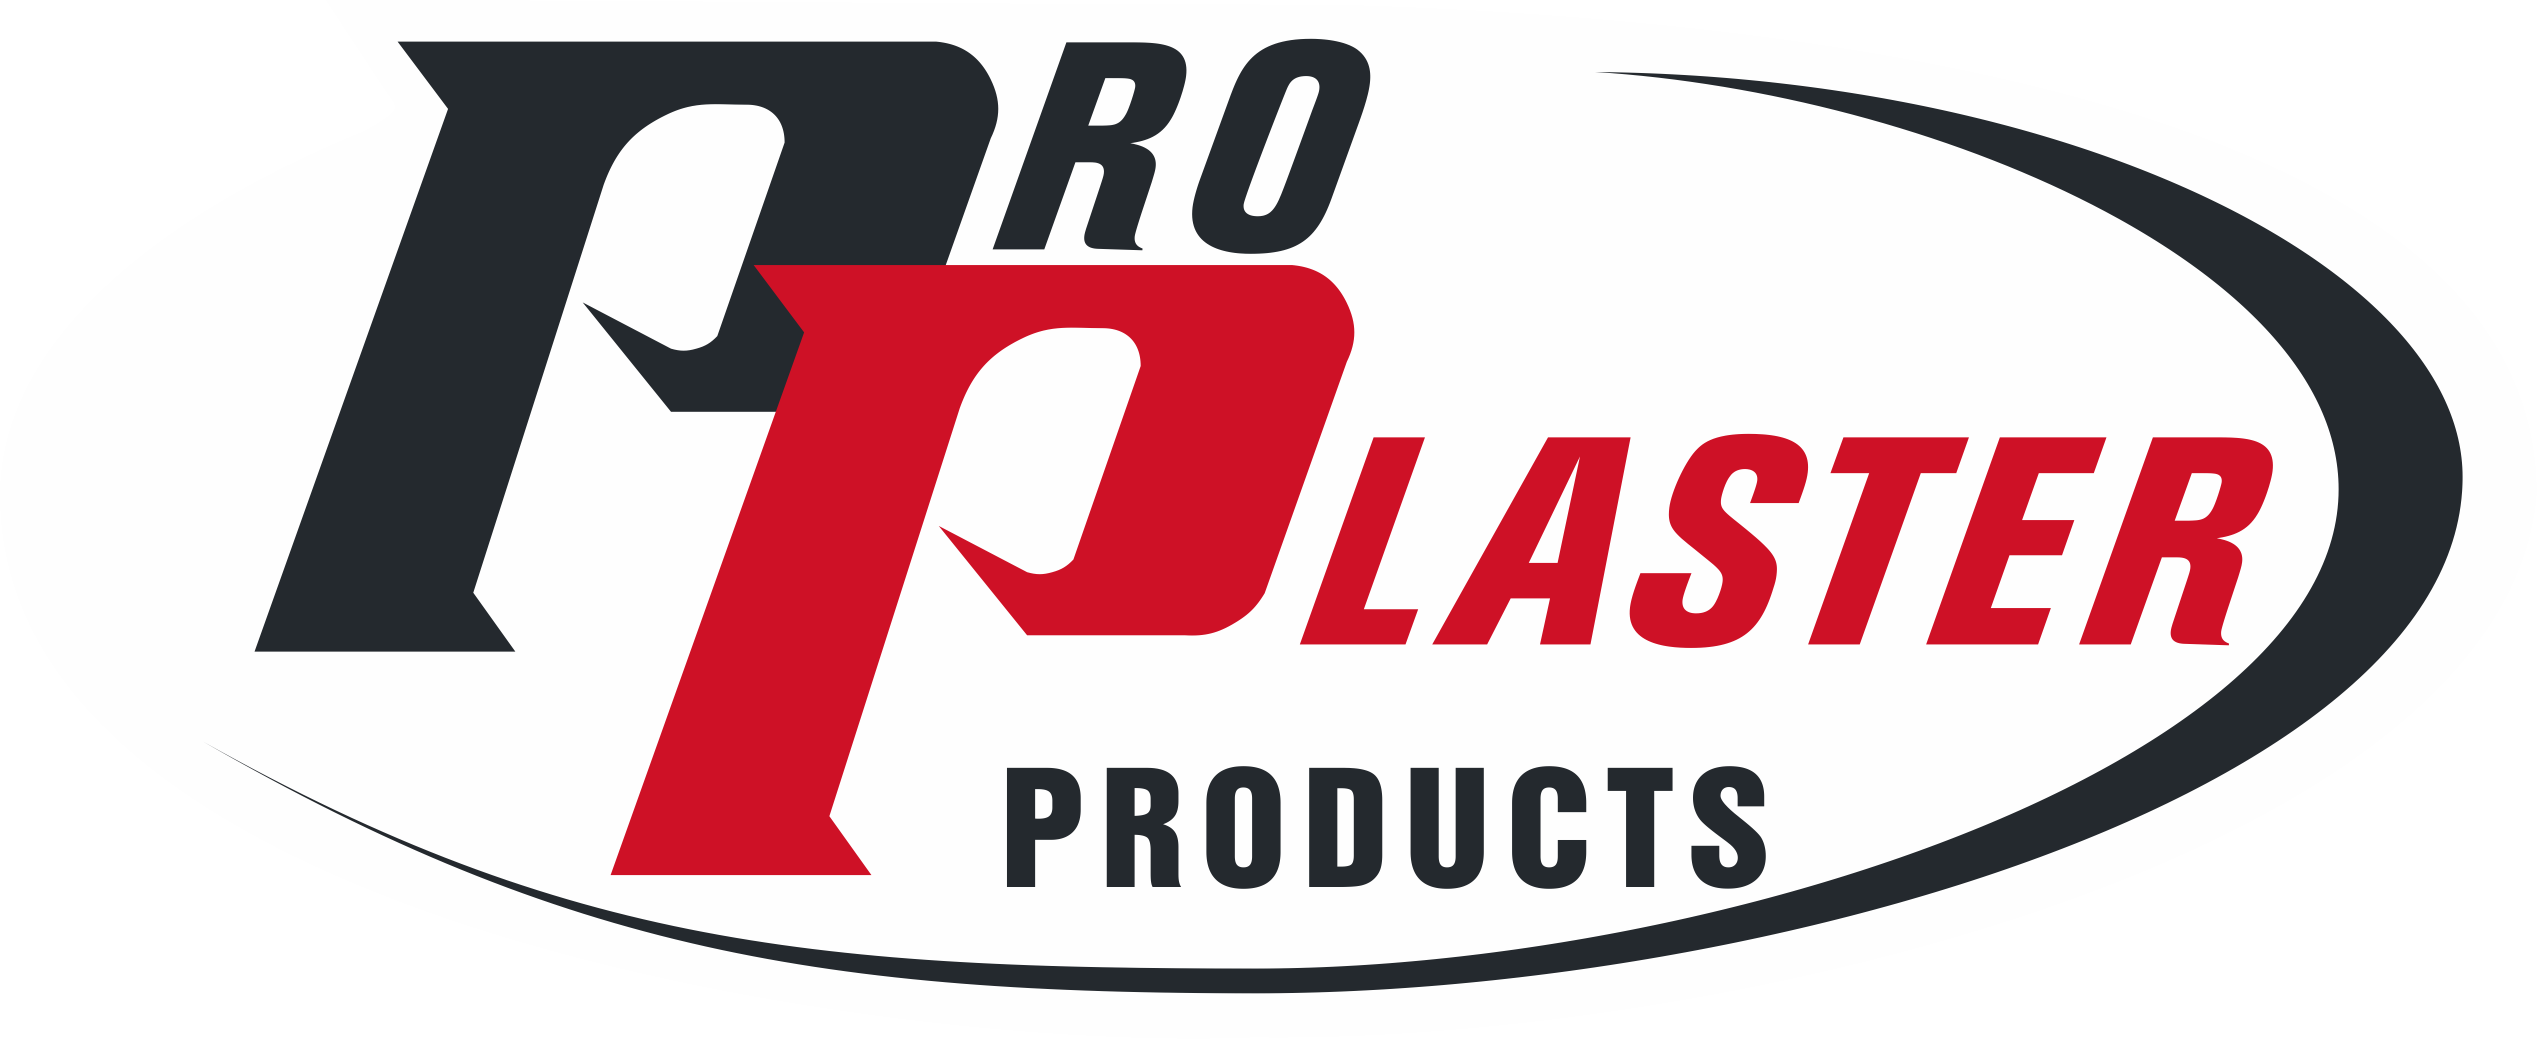 Pro Plaster Logo - Dark Background